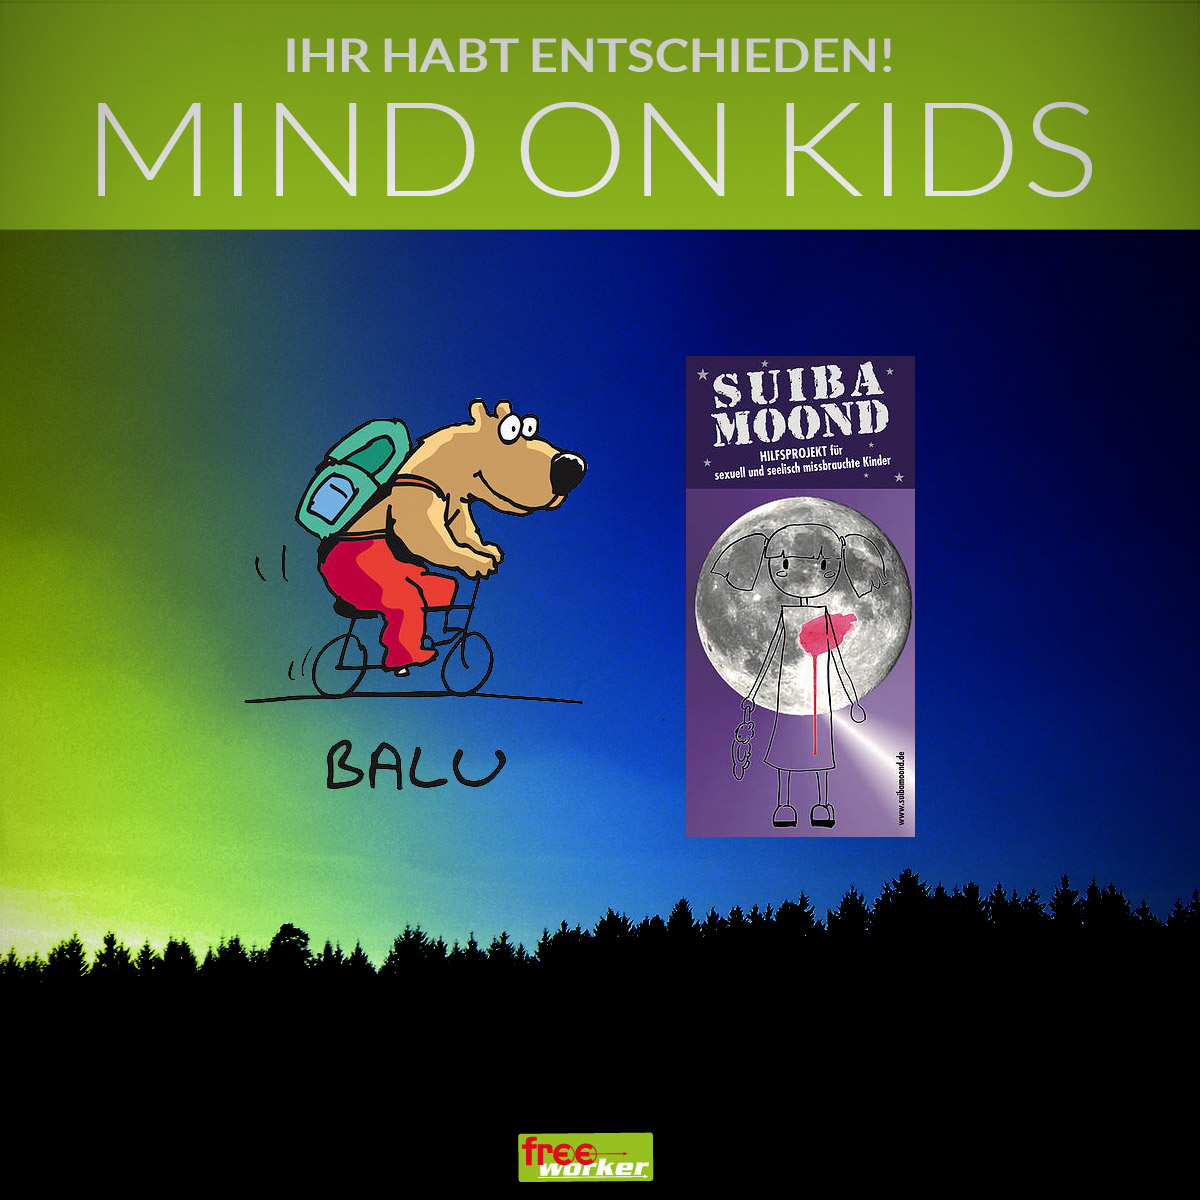 Nikolausparty 2015: Spenden gehen an „Mind on Kids“